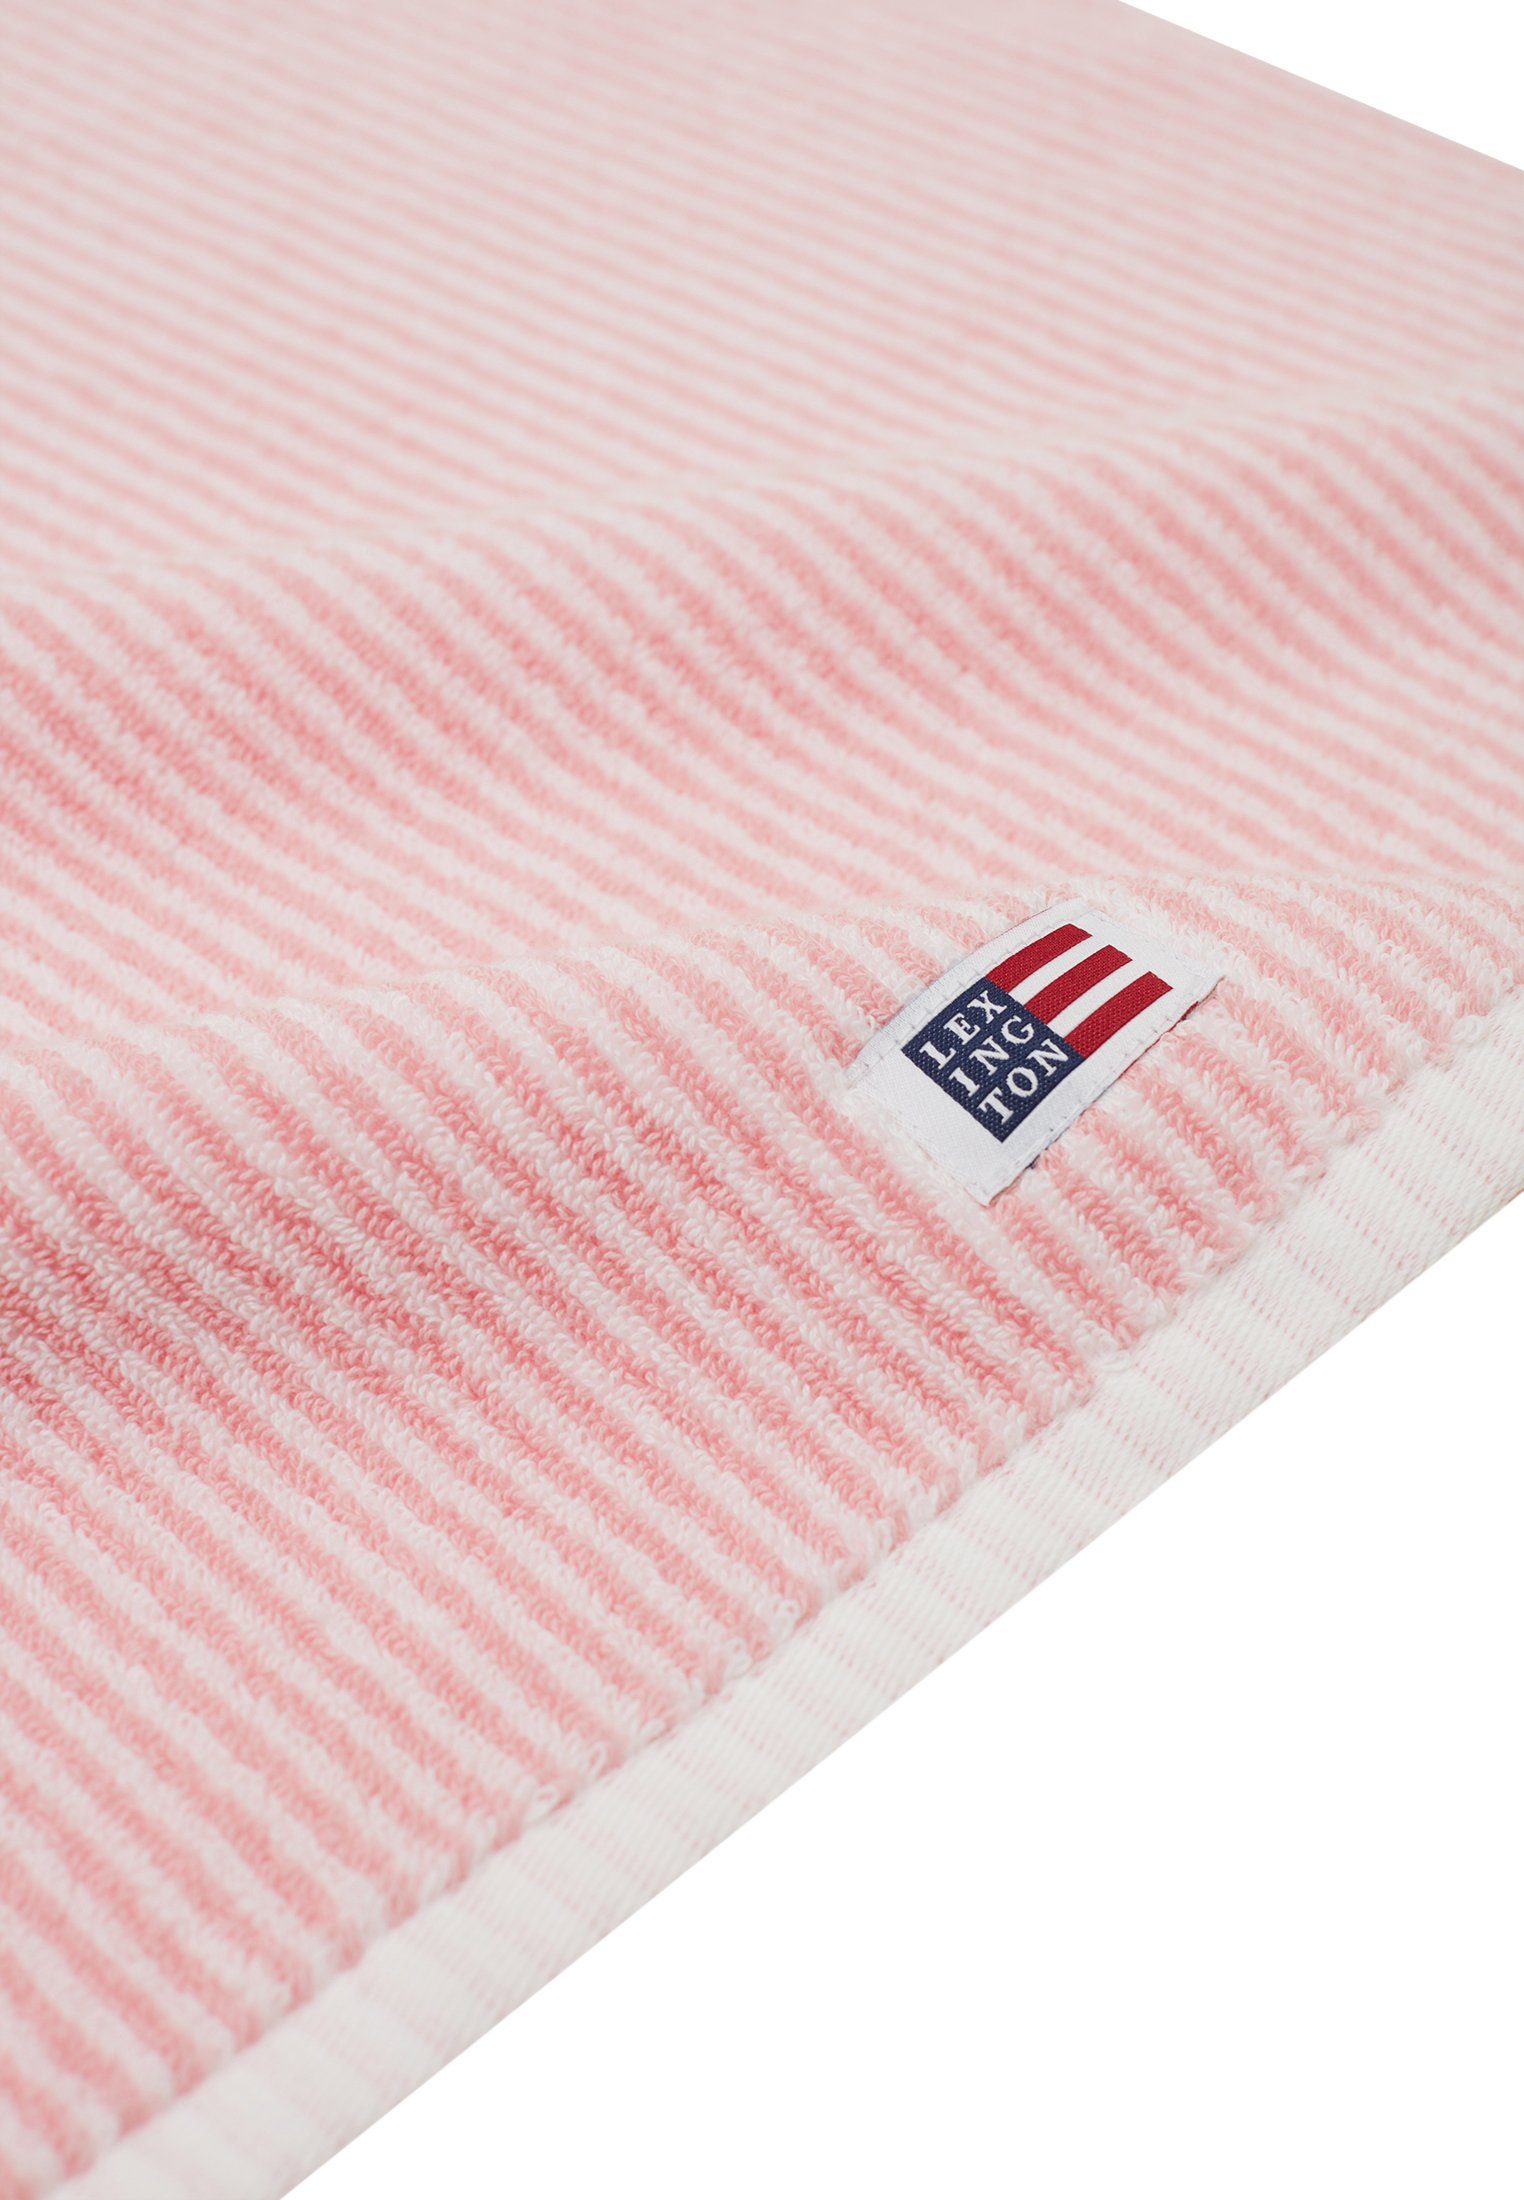 Lexington petunia Handtuch Original pink/white Towel